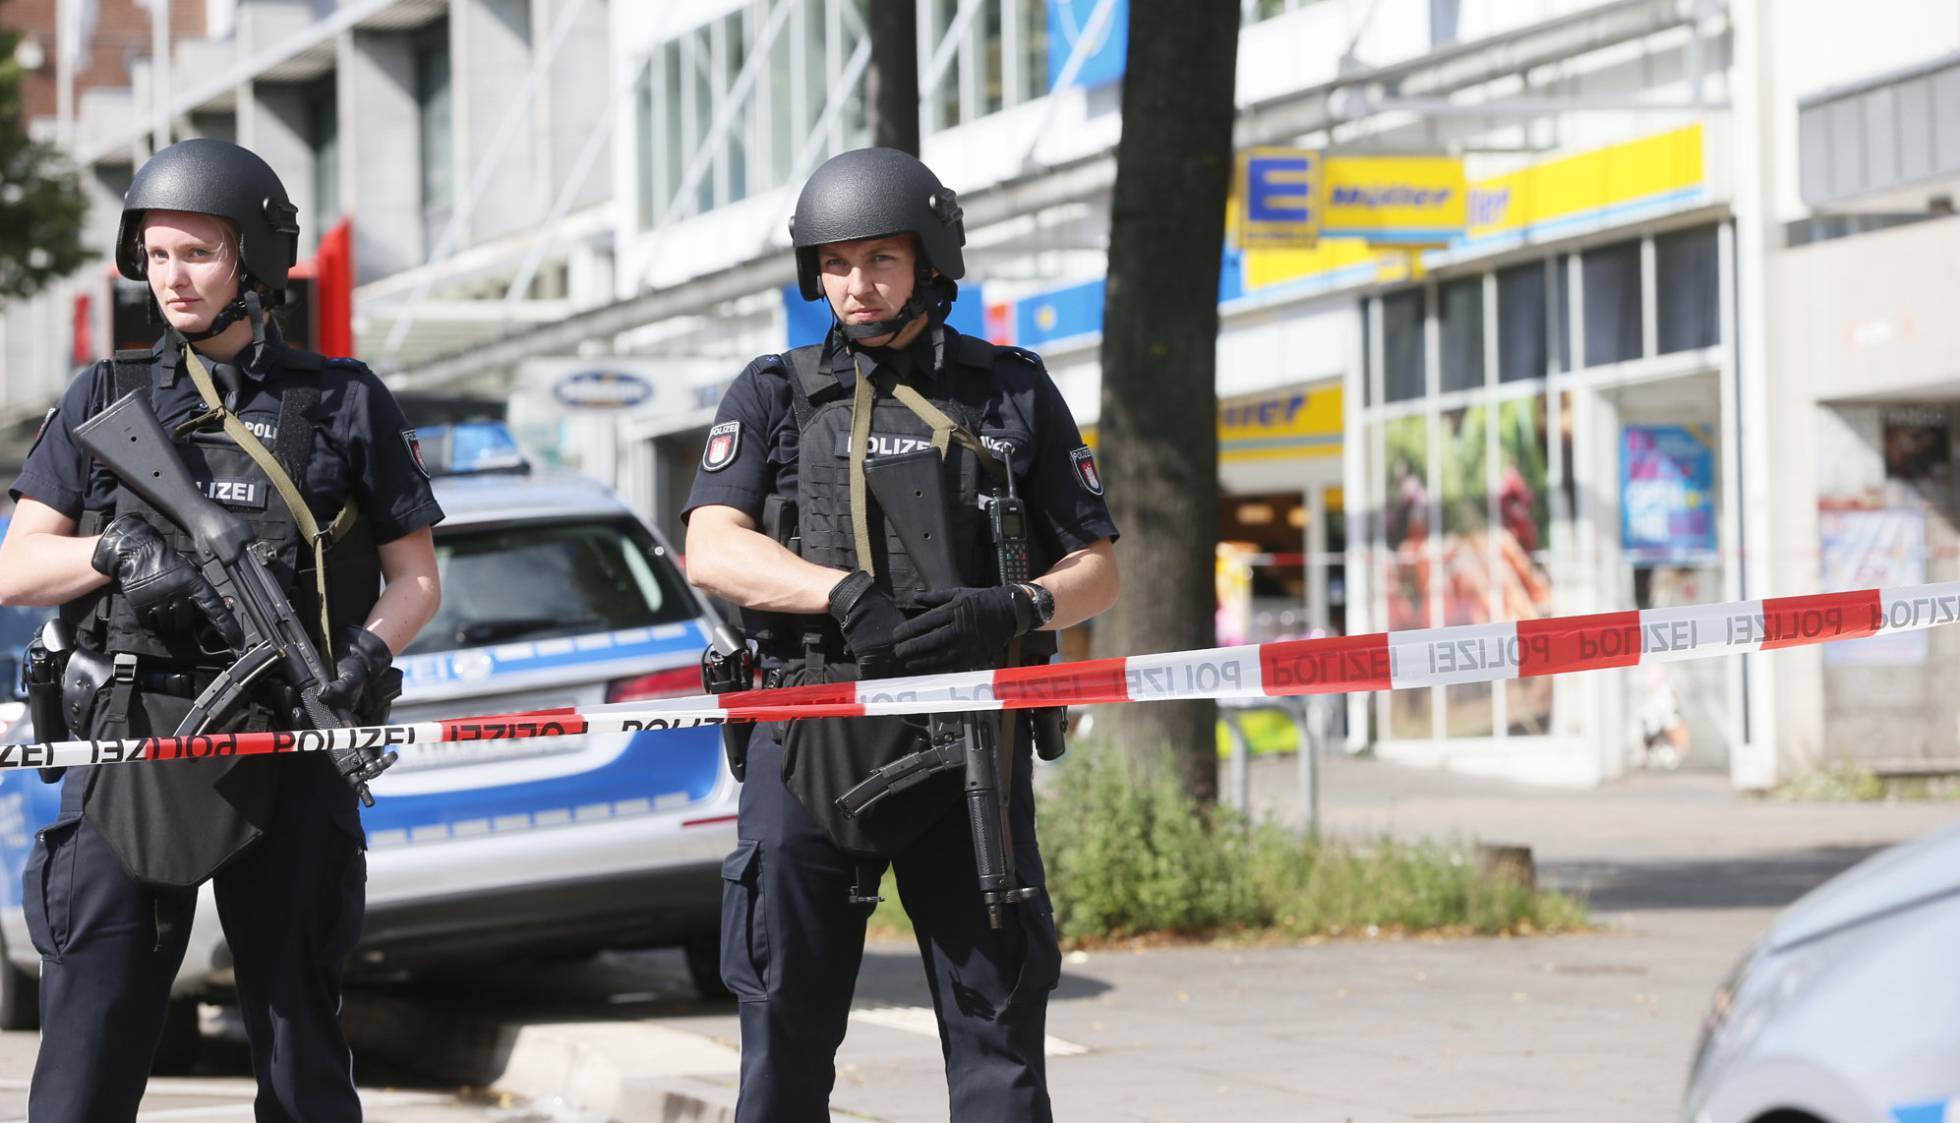 Un muerto en un ataque a cuchilladas en un supermercado de Hamburgo